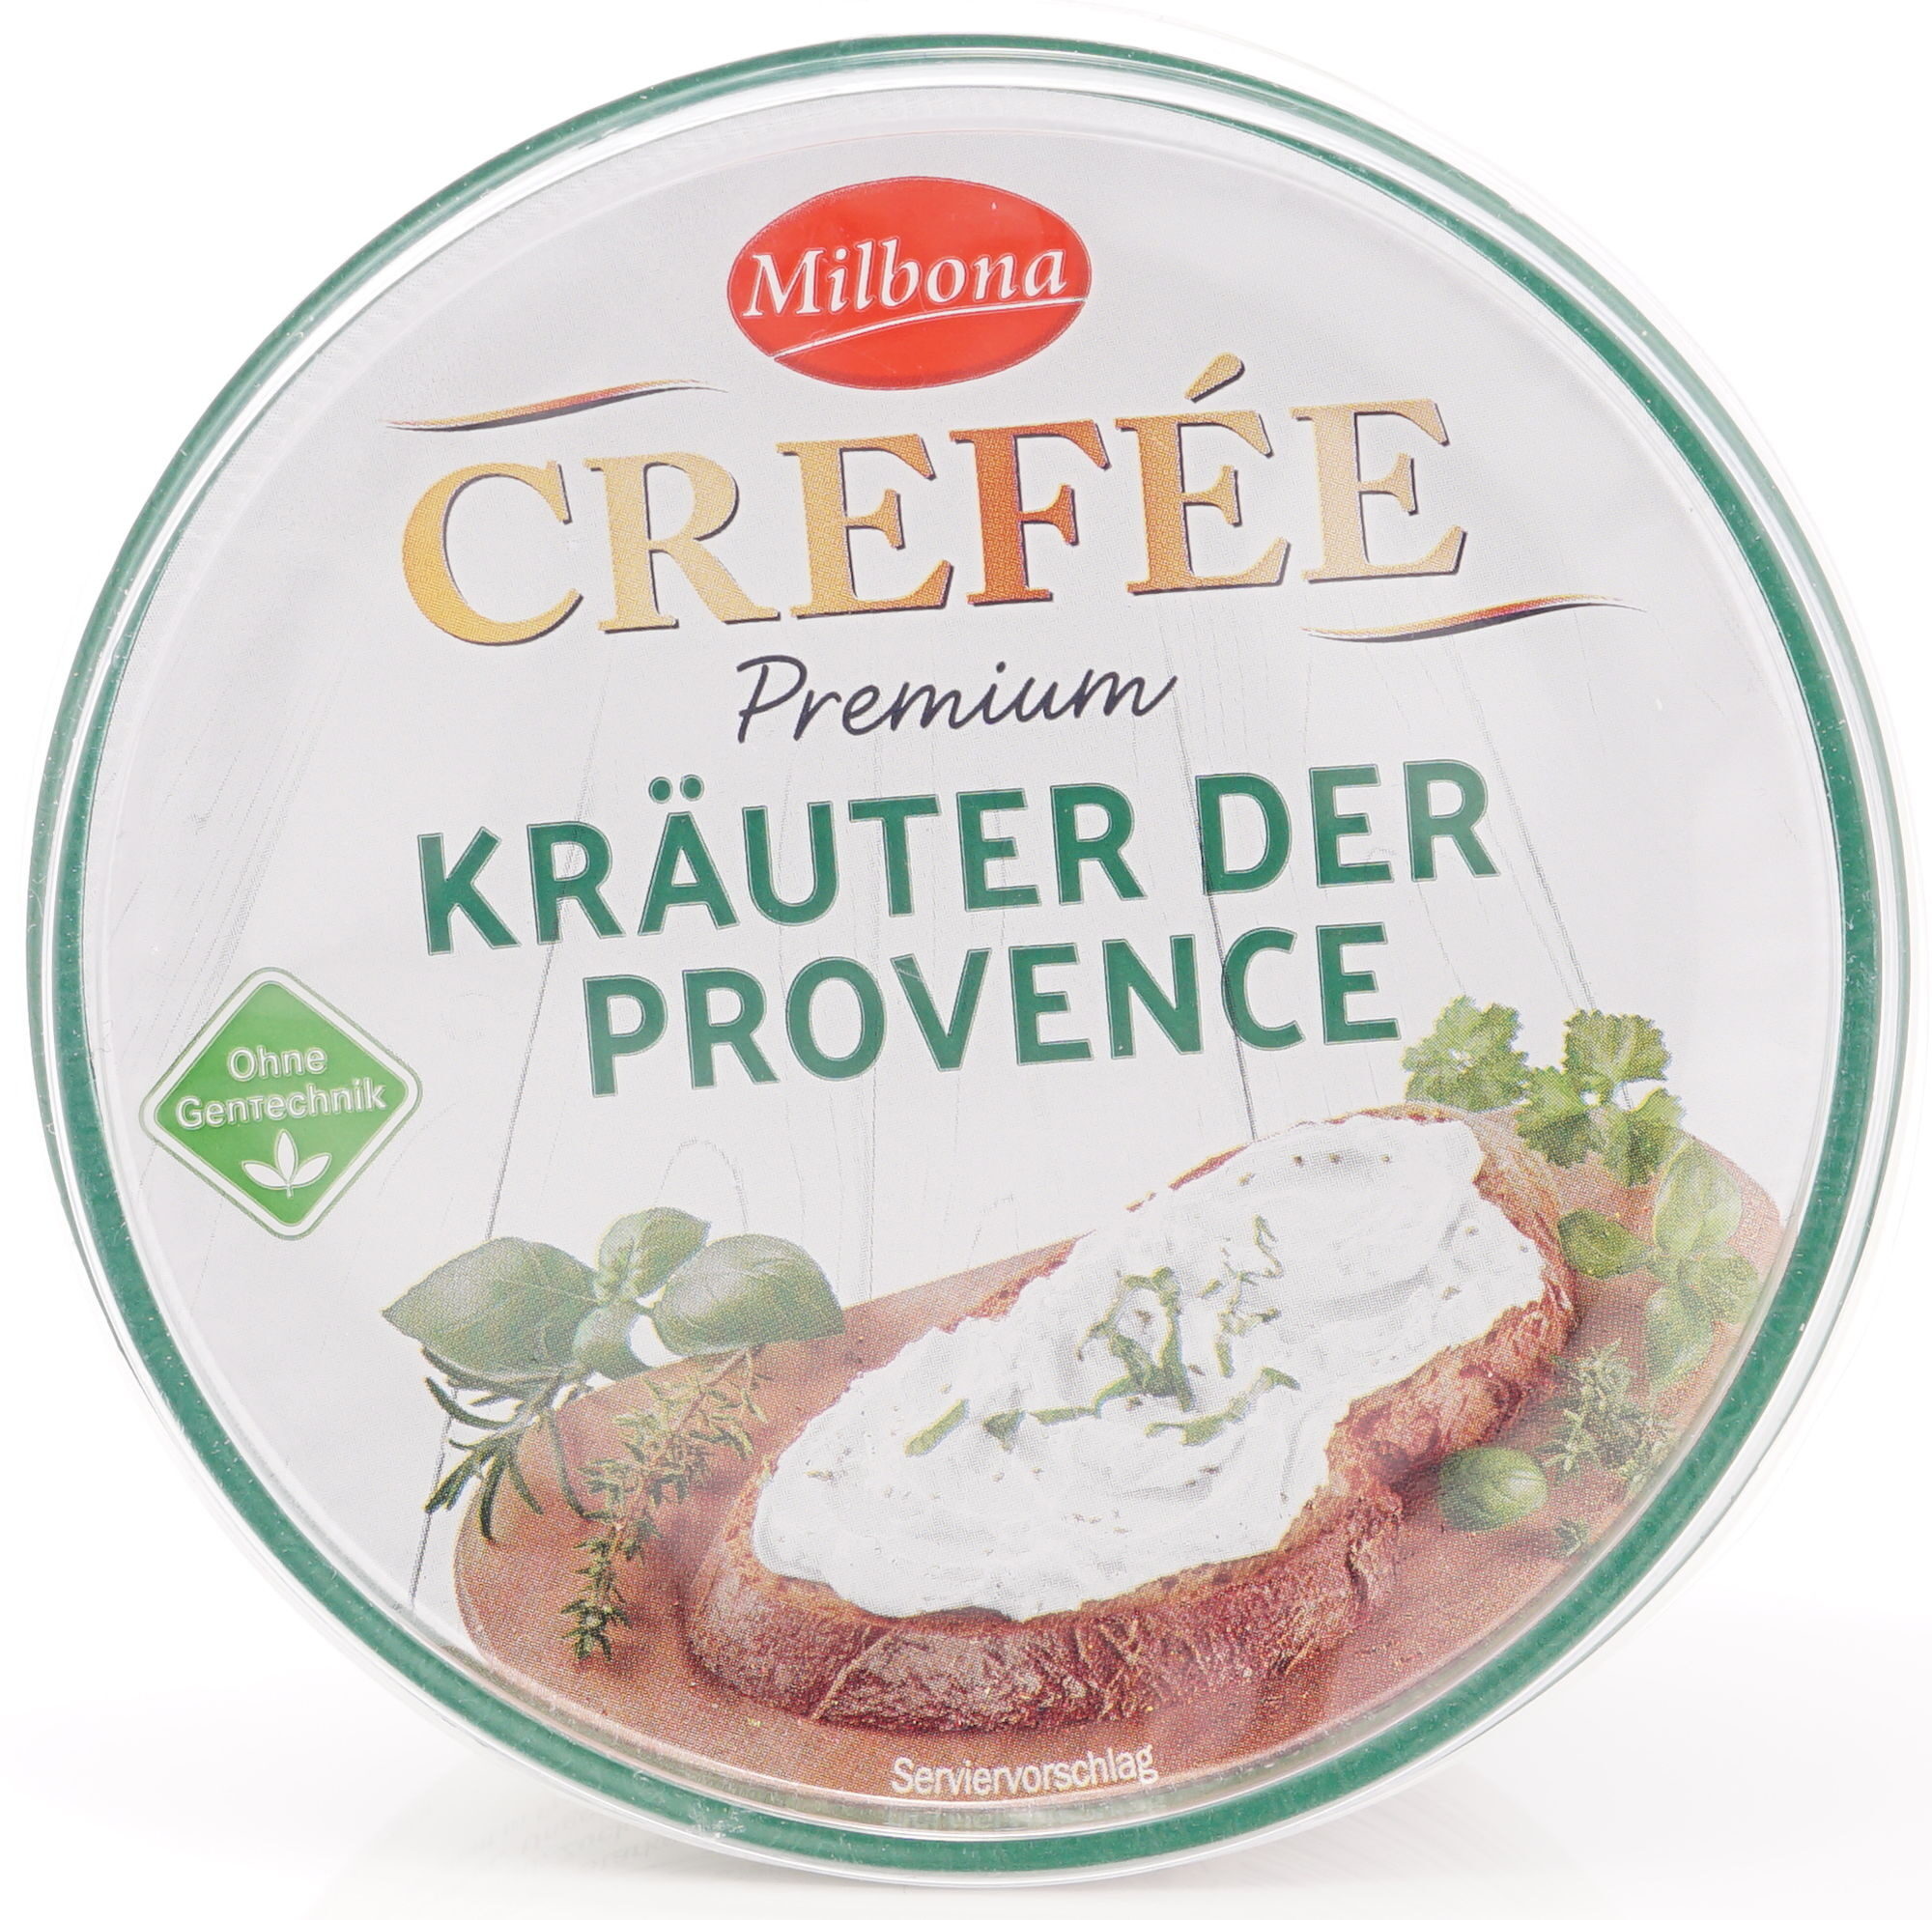 Crefee Kräuter der Provence - Product - de